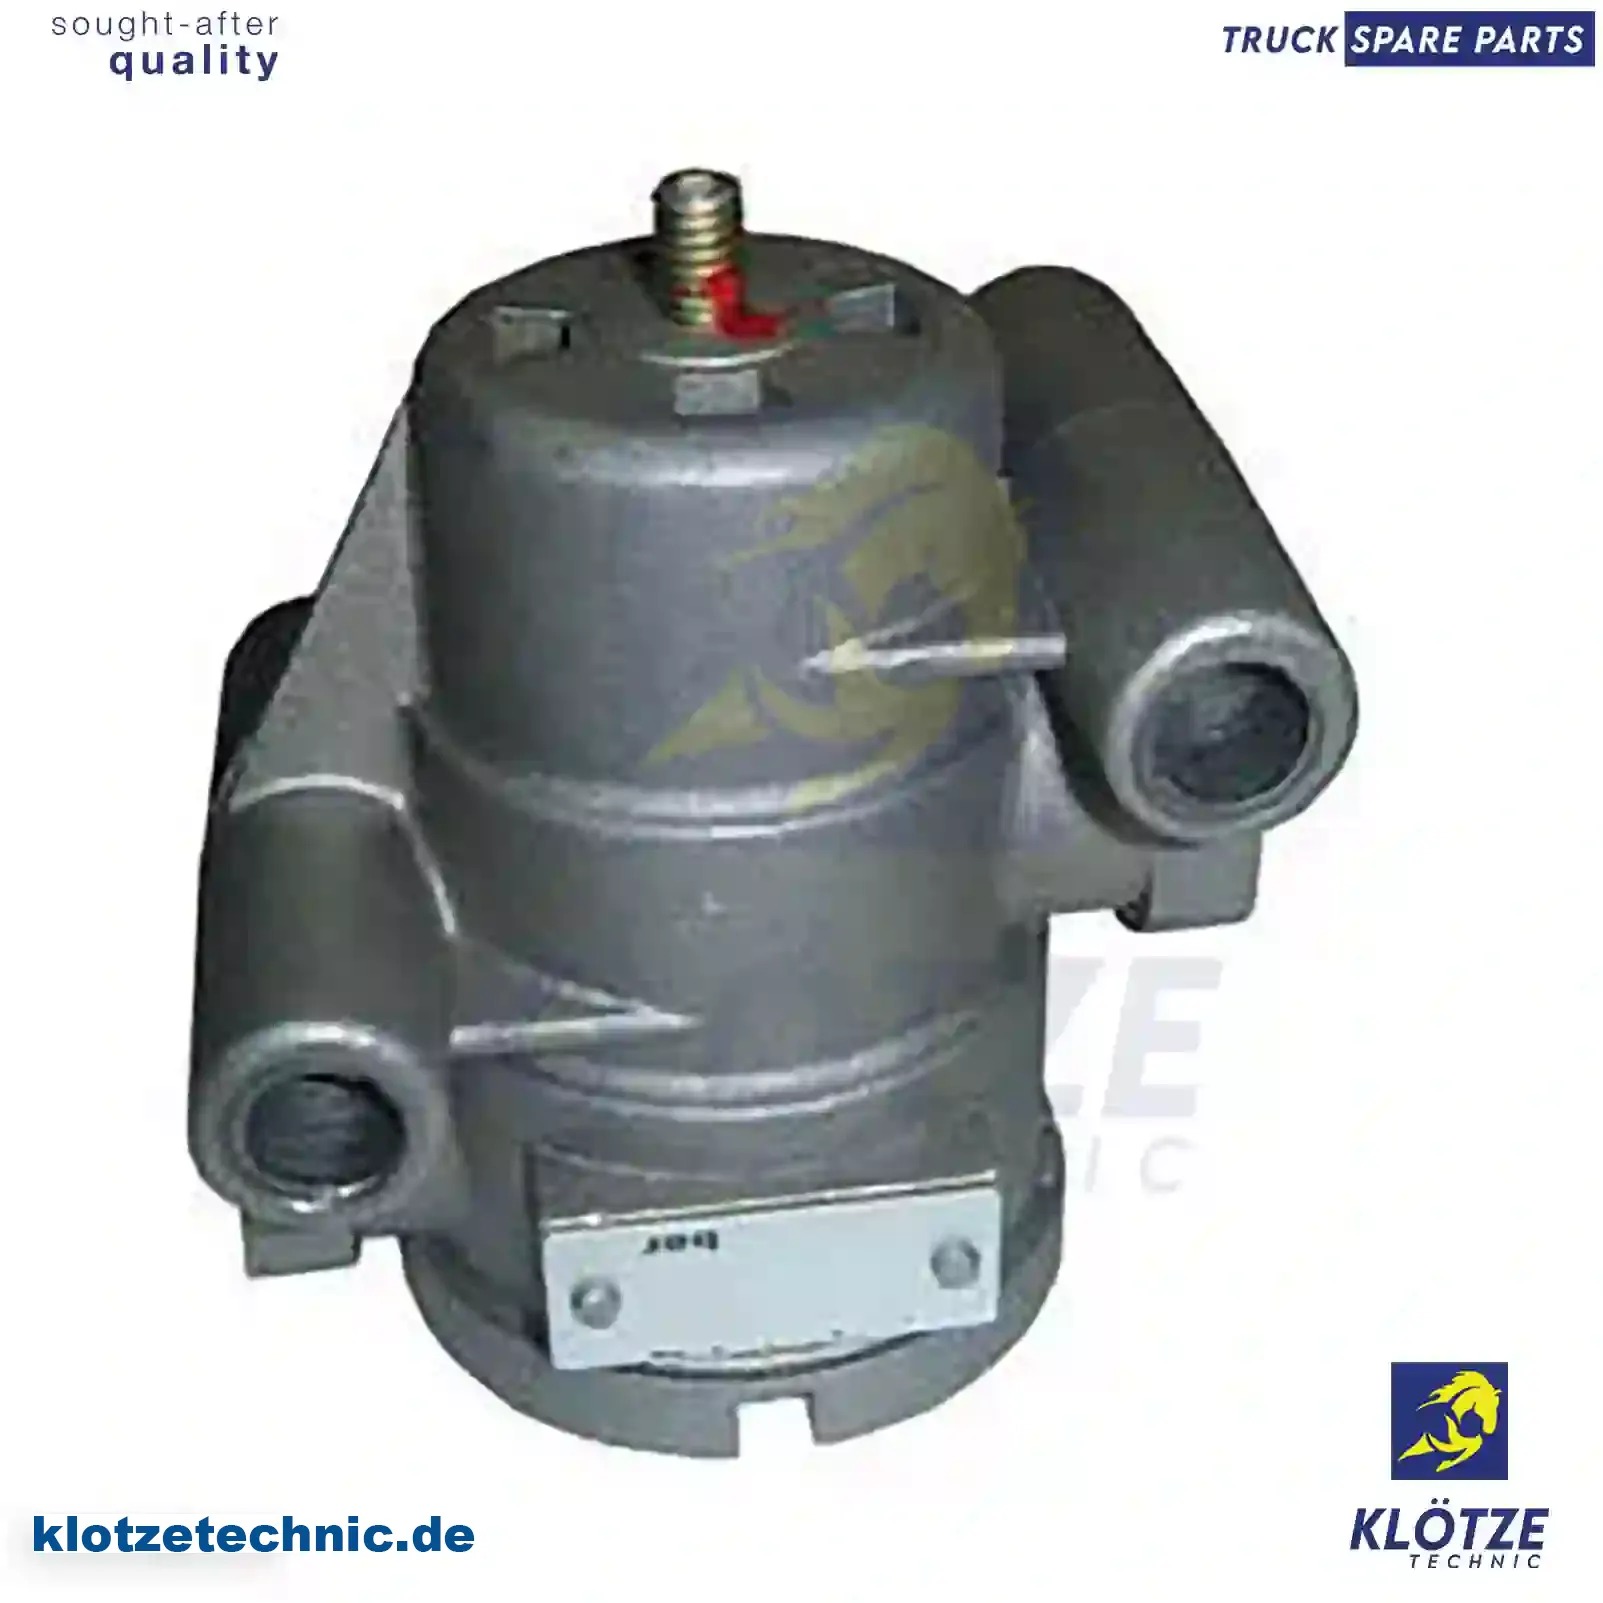 Pressure limiting valve, 1371429, ZG50569-0008, || Klötze Technic